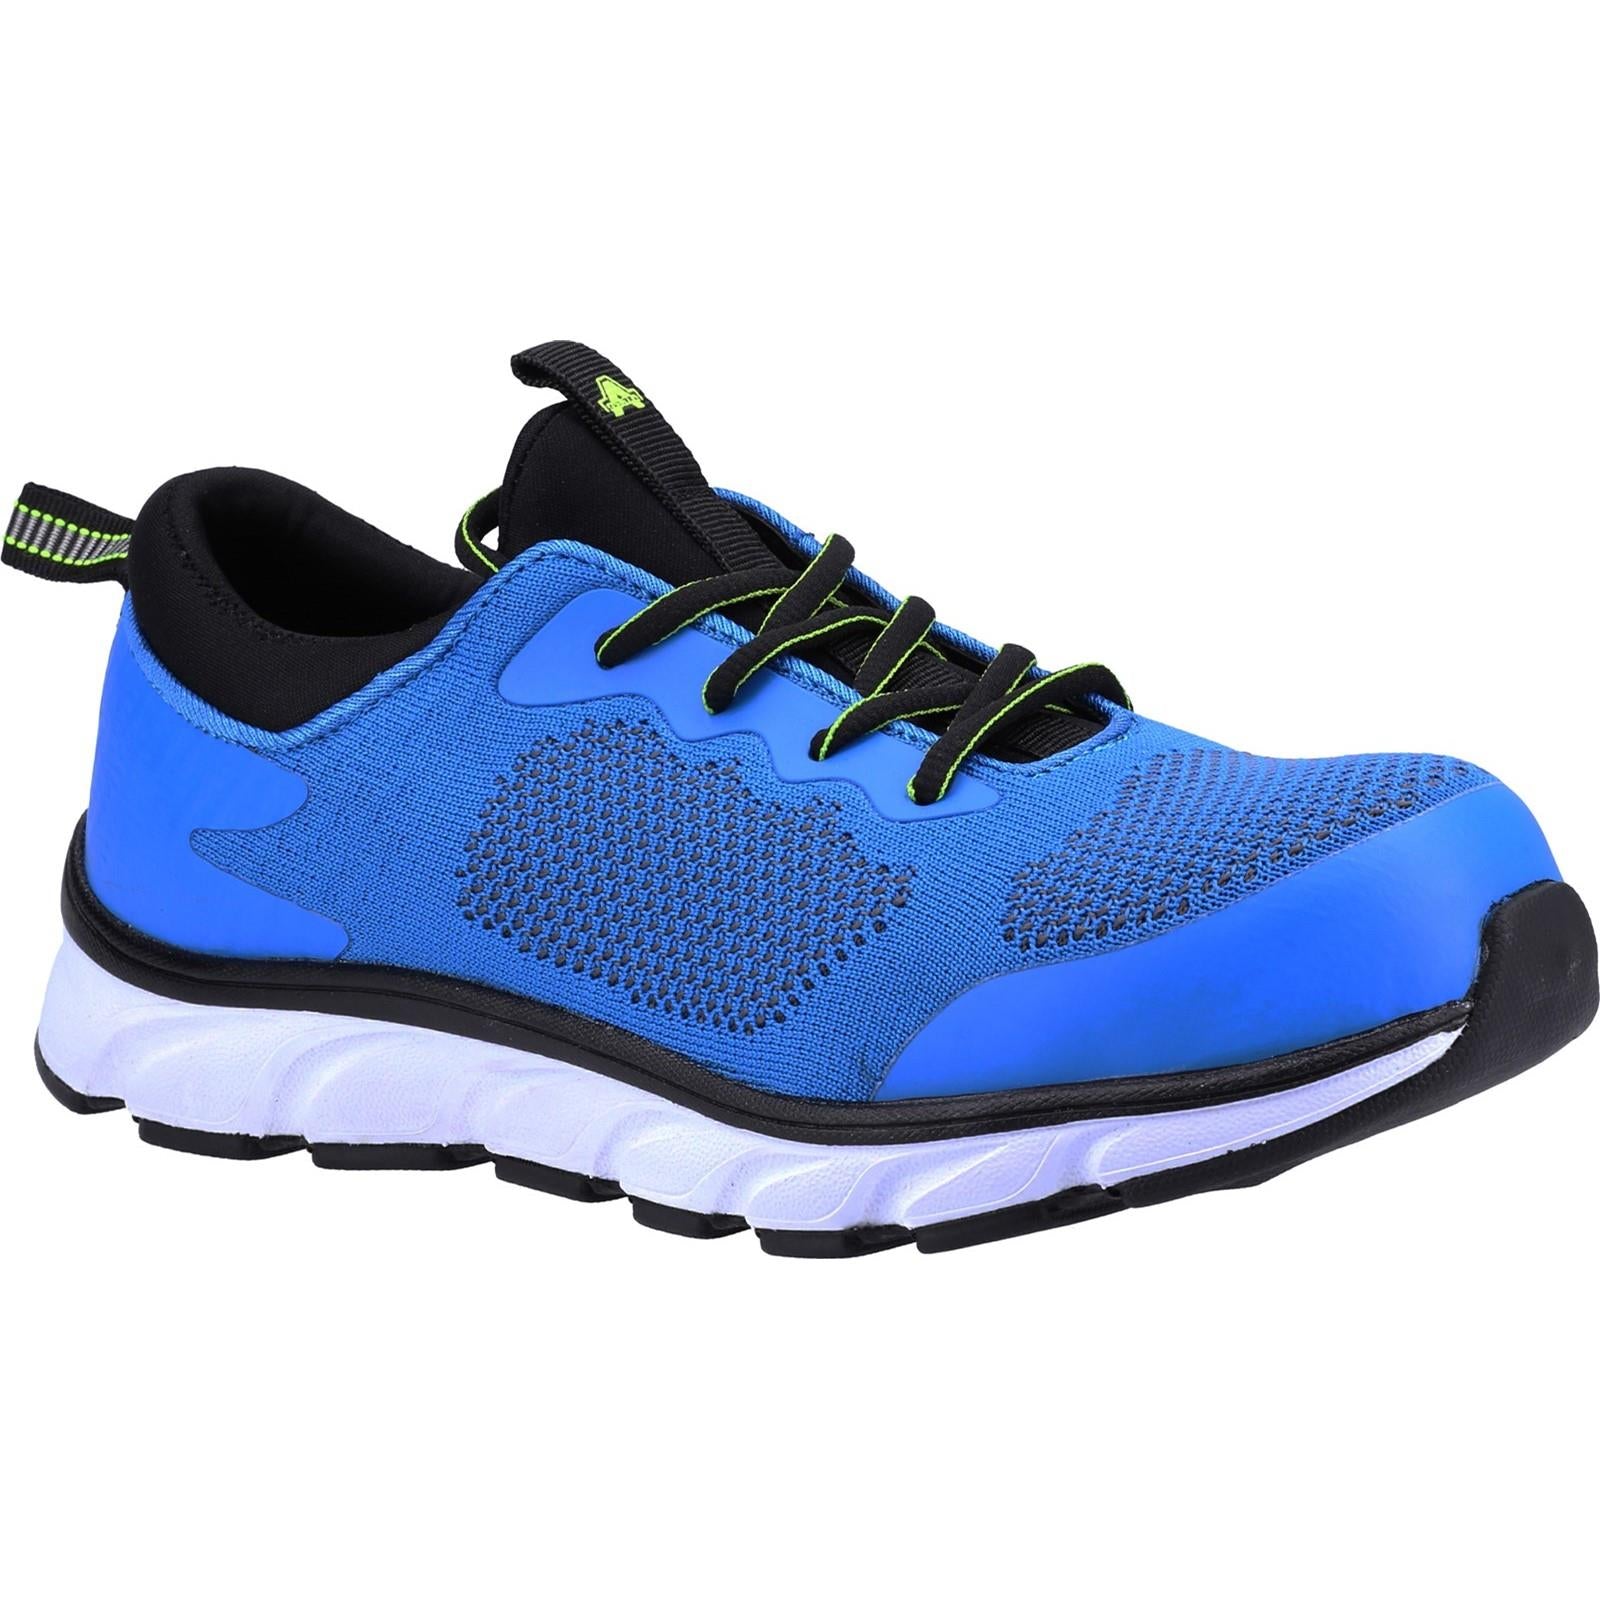 Amblers S1P Vegan blue composite toe/midsole safety trainer work shoe #AS718